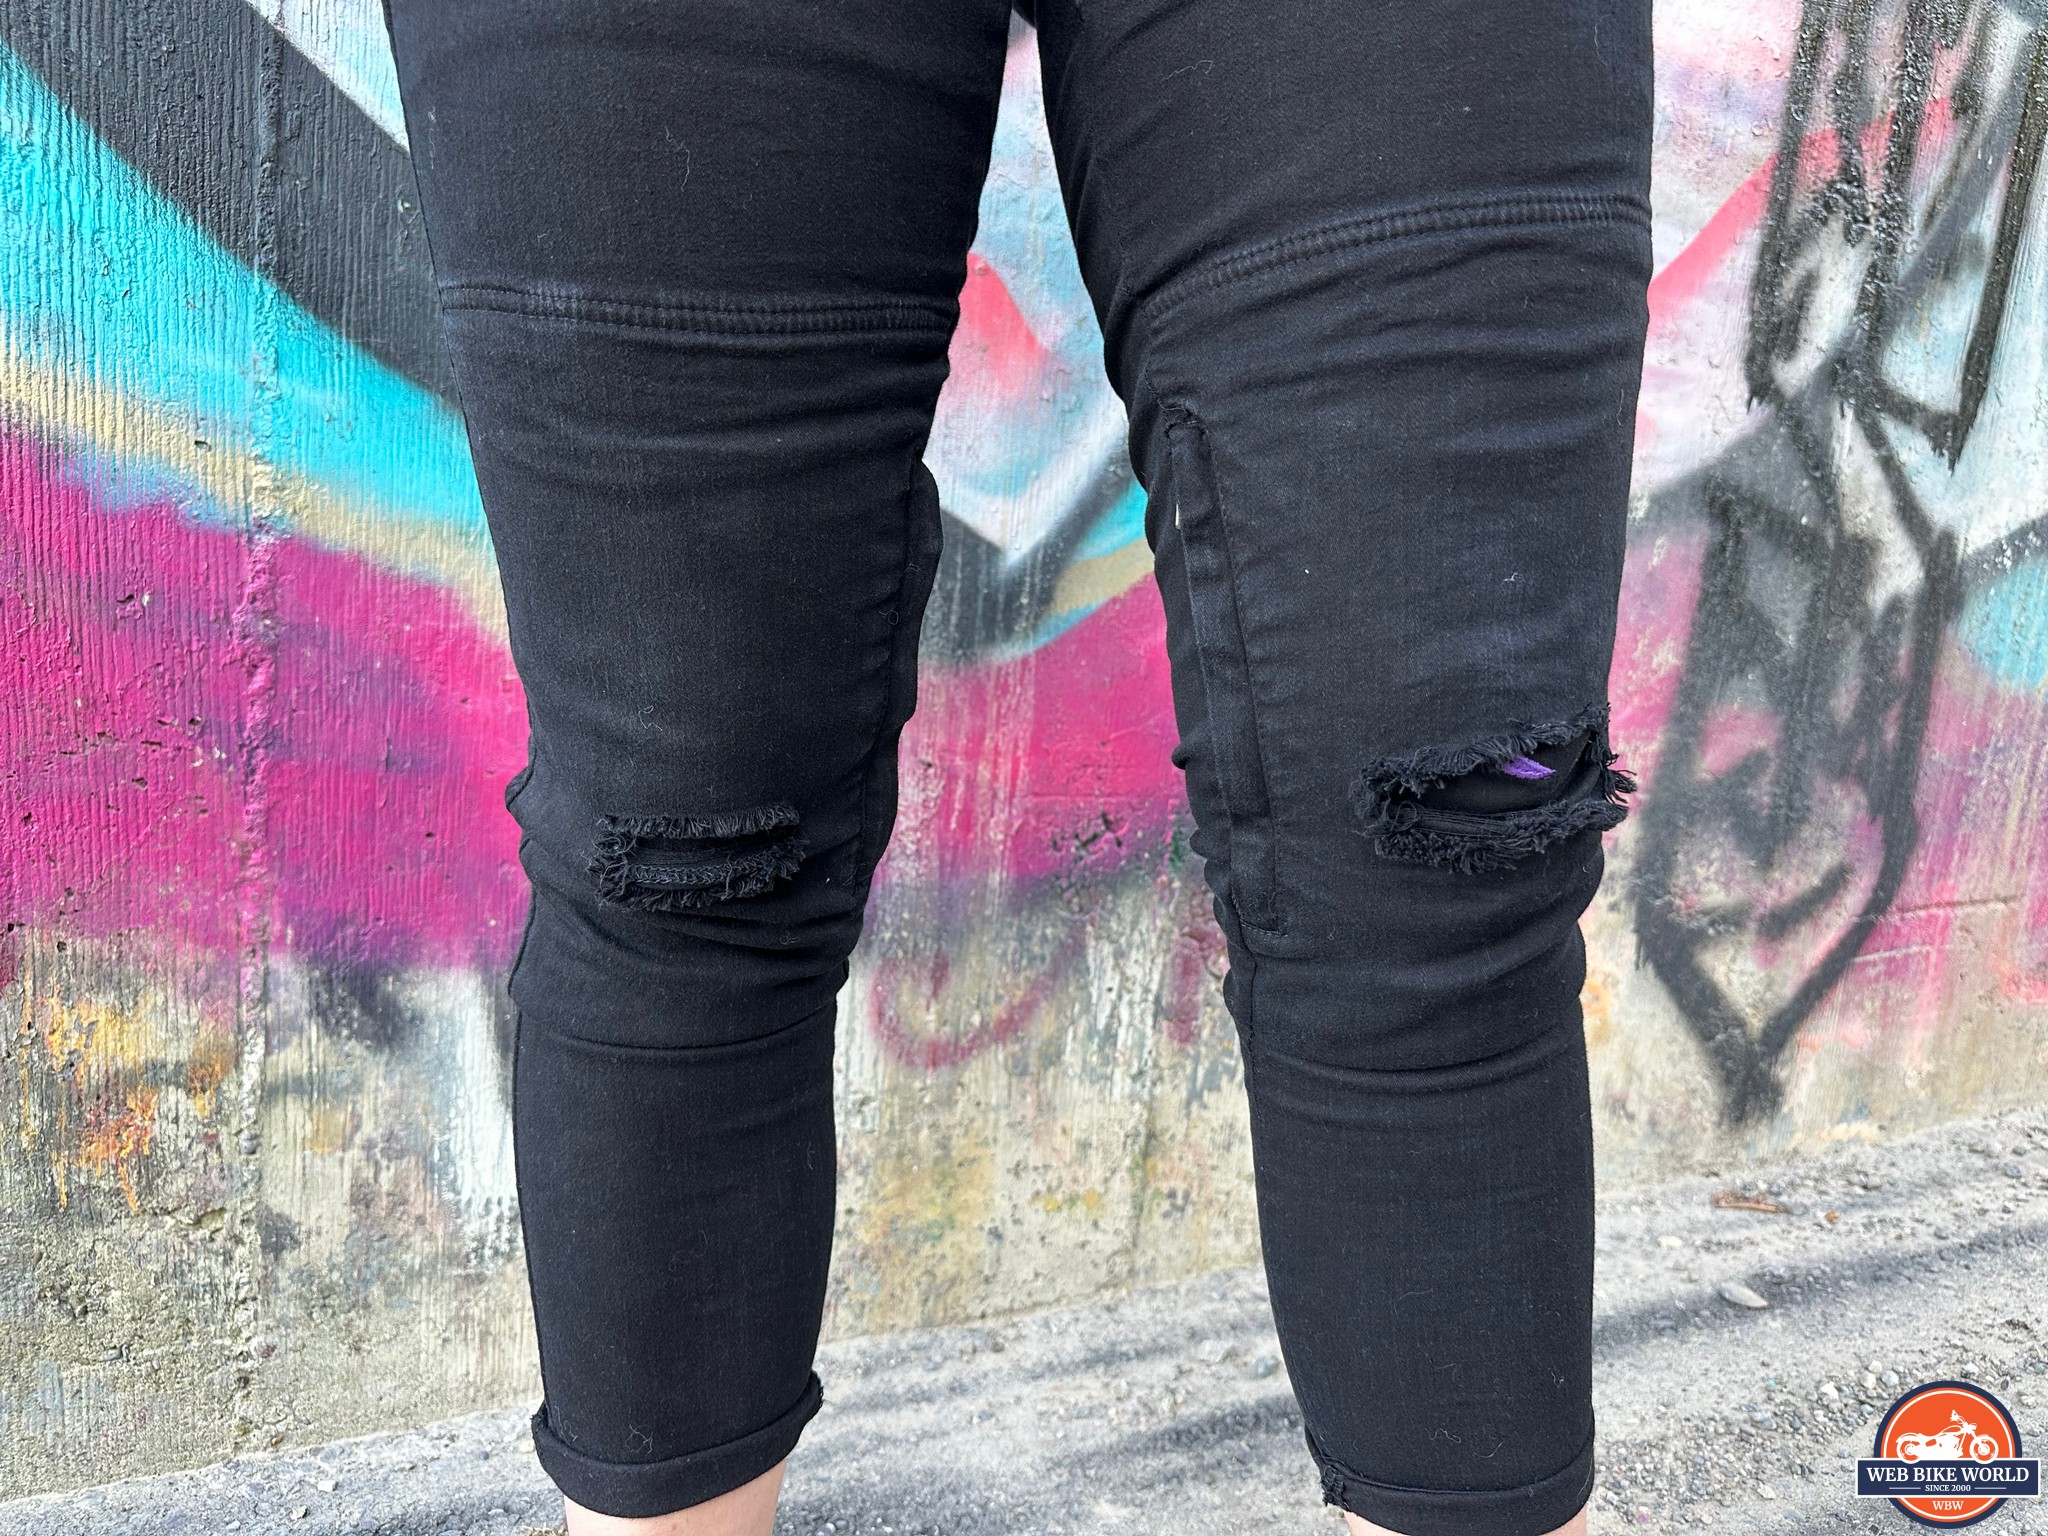 RAVEN Moto Revolt Armored Women's Jeans Review